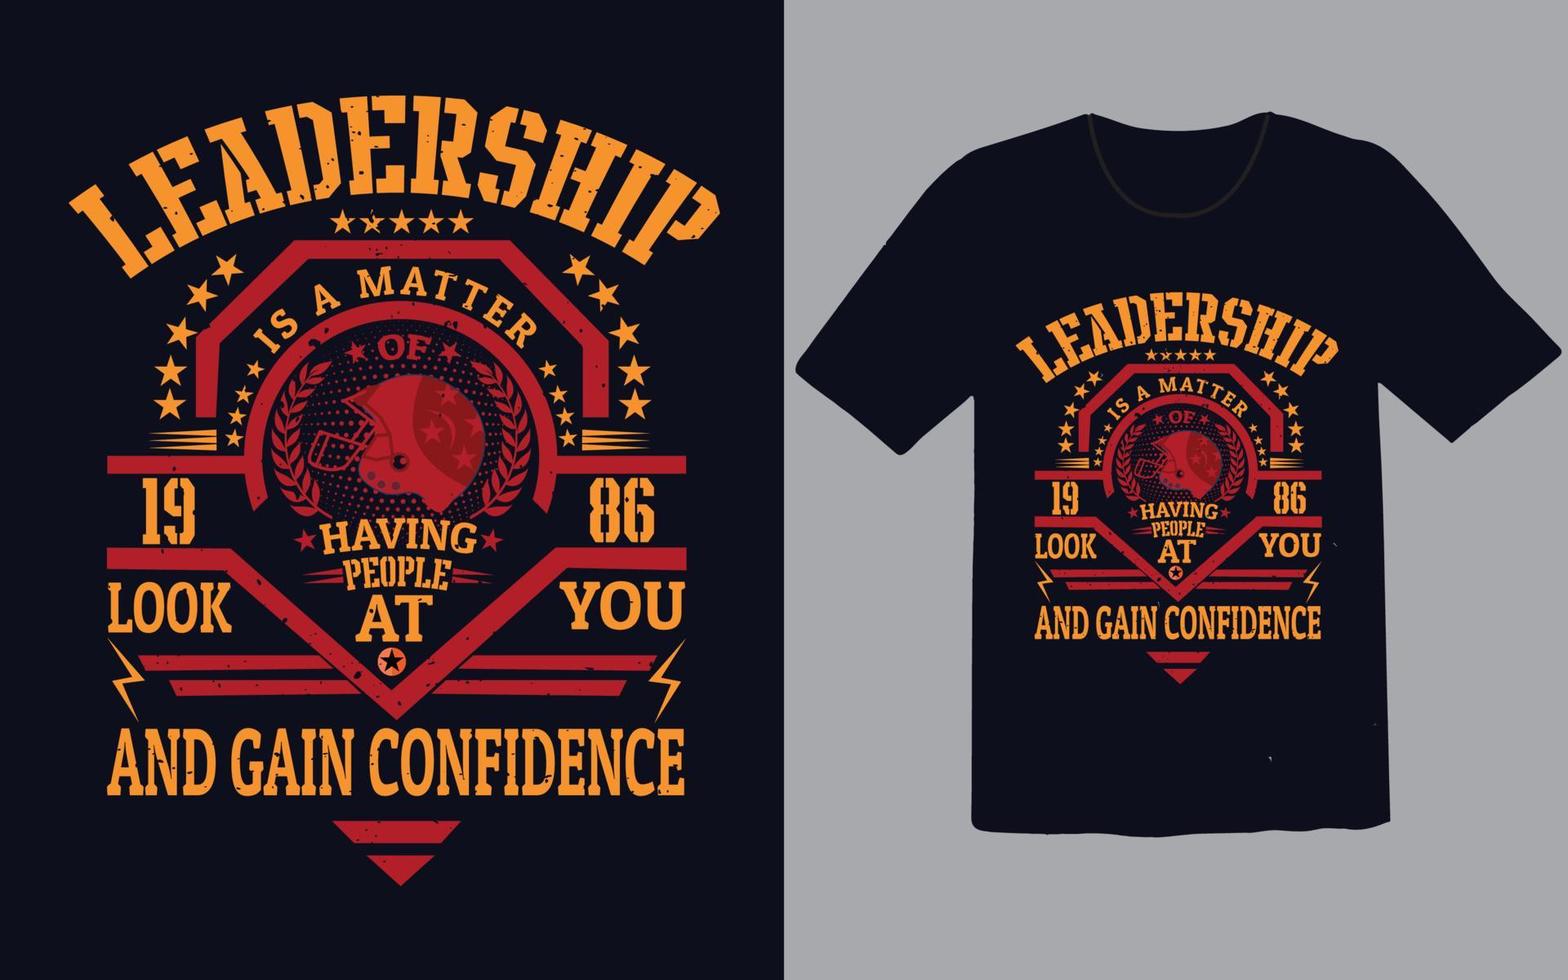 conception de t-shirt de football américain de leadership vecteur